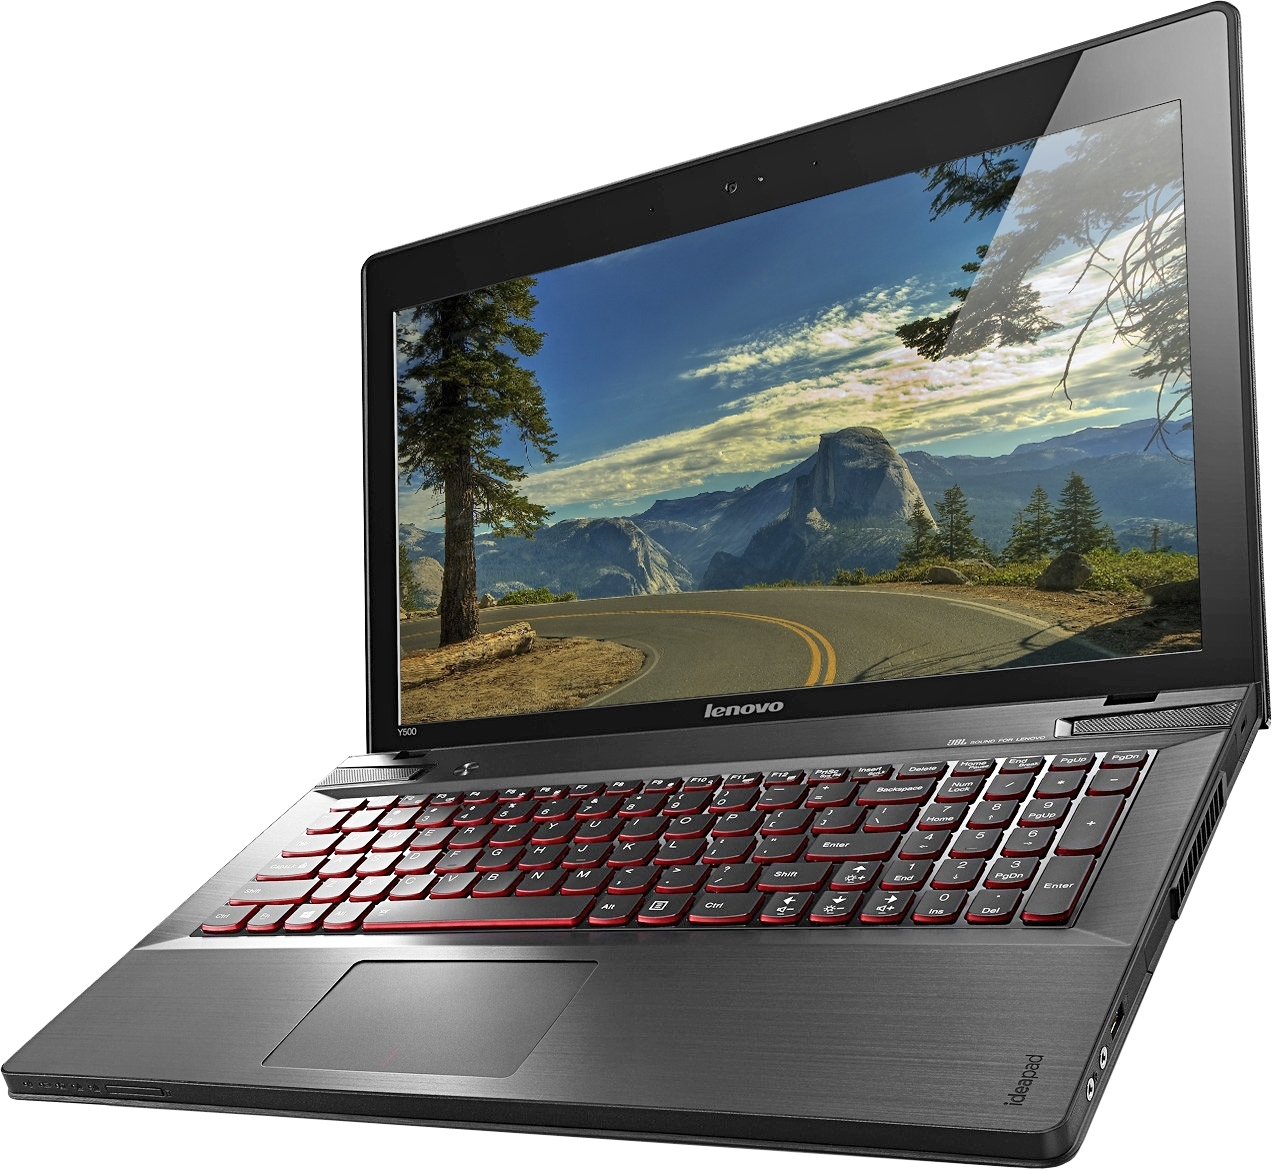 Купить Ноутбук Lenovo Ideapad Y500a